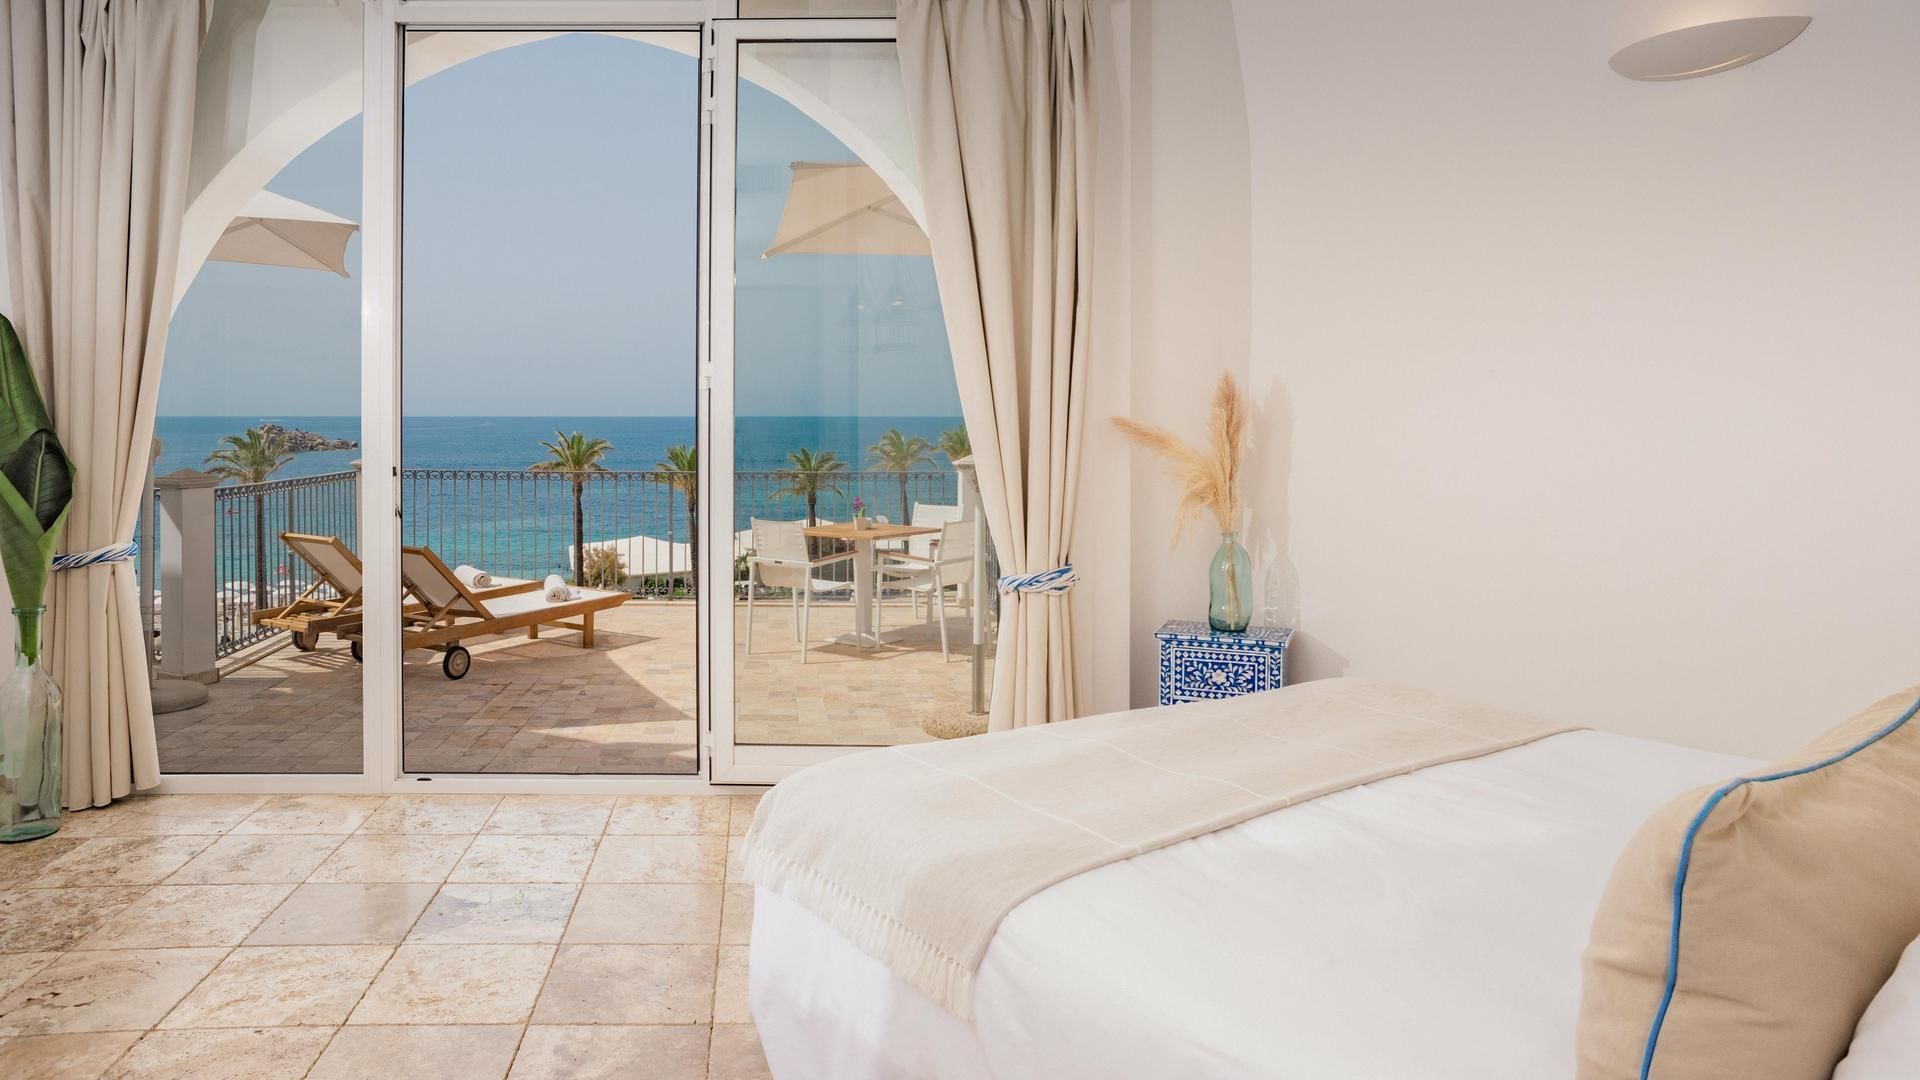 Bedroom & balcony in Capo Boi Suite at Falkensteiner Hotels